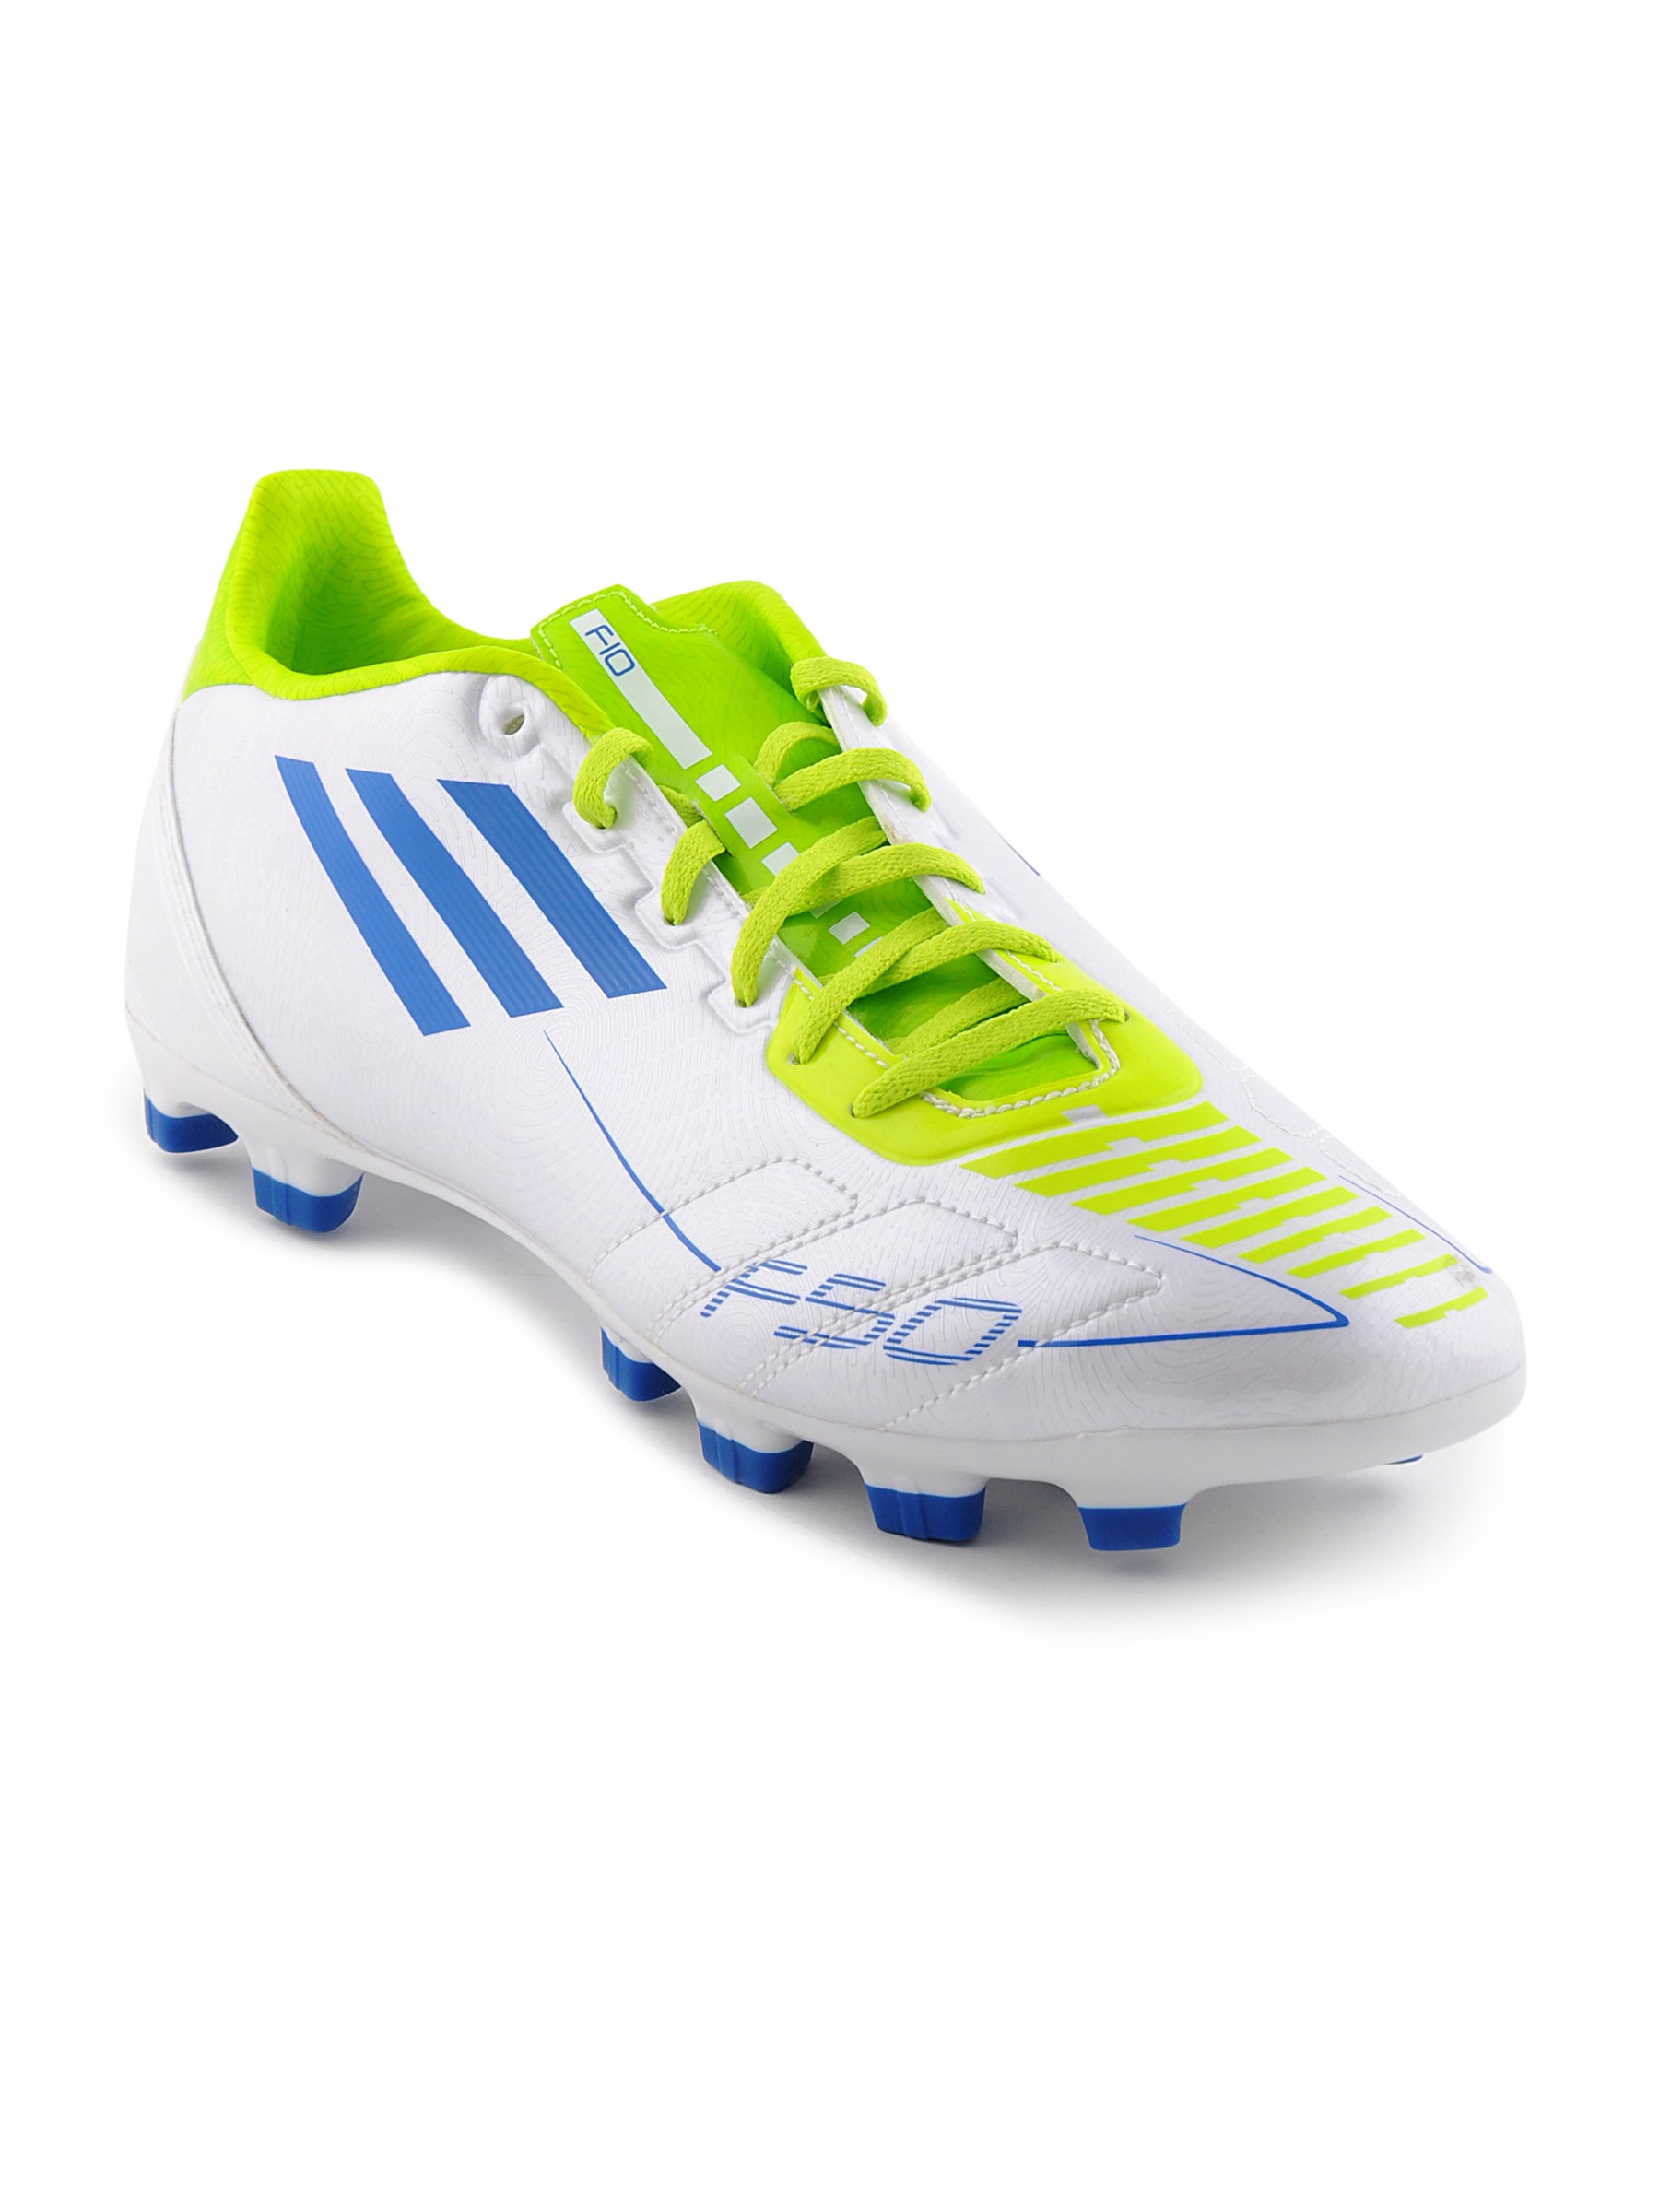 ADIDAS Men F10 Trx HG White Sports Shoes